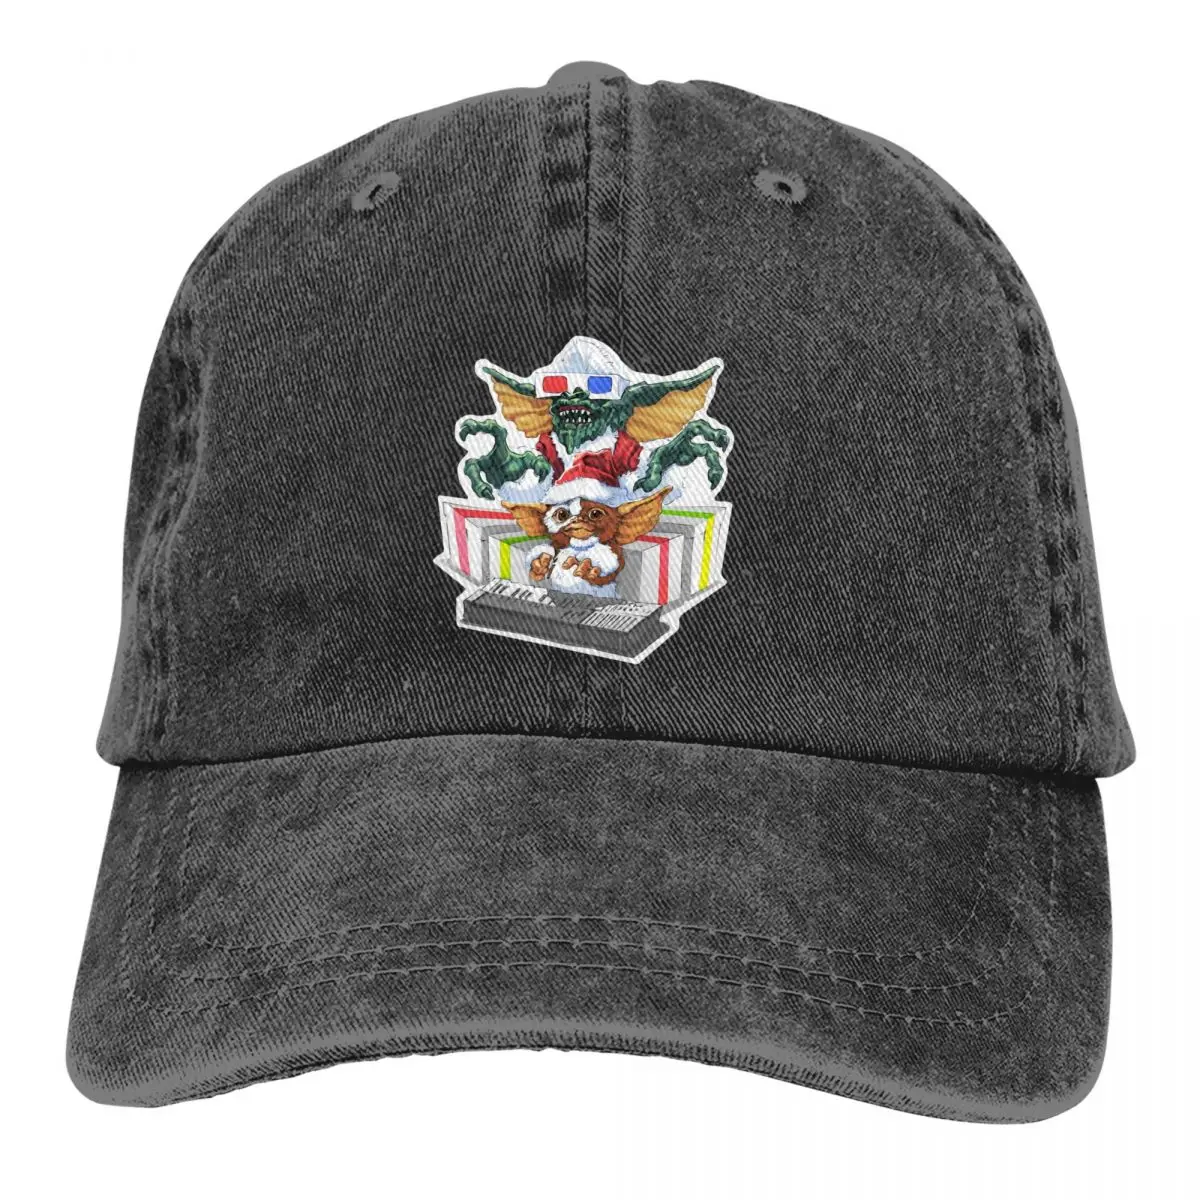 

Gremlins Billy Pelzer Thriller Movie Multicolor Hat Peaked Men Women's Cowboy Cap Christmas Baseball Caps Visor Protect Hats